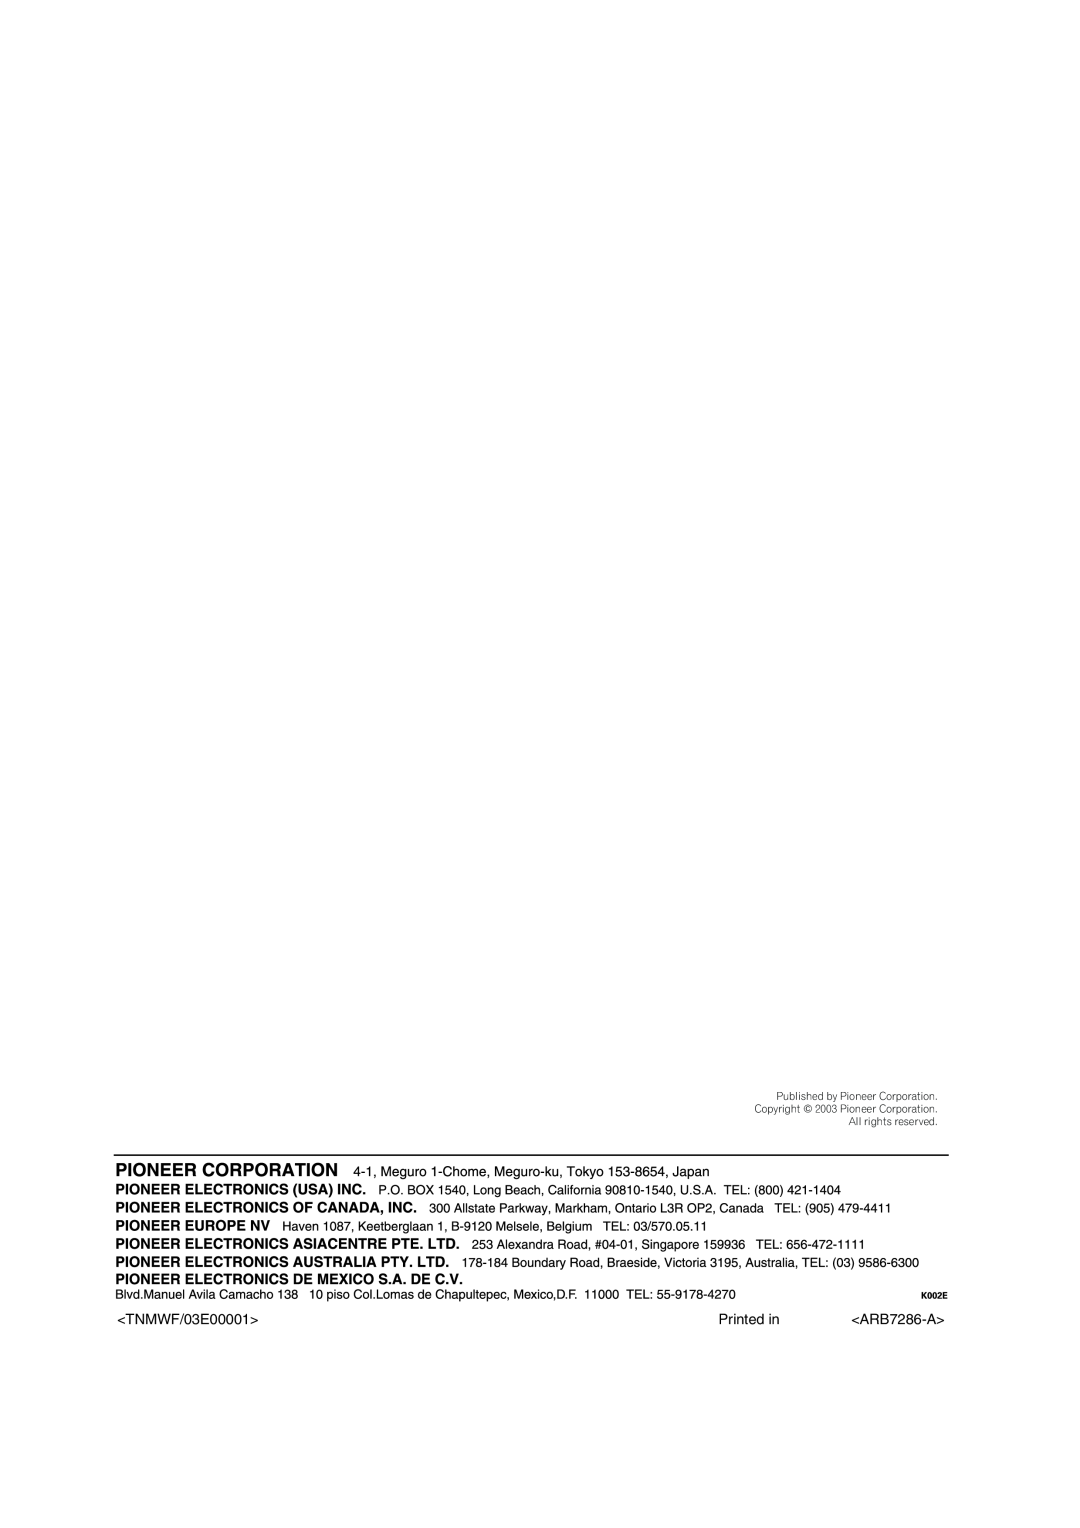 Pioneer VSX-AX5i-G manual <TNMWF/03E00001>, Printed in, ARB7286-A 